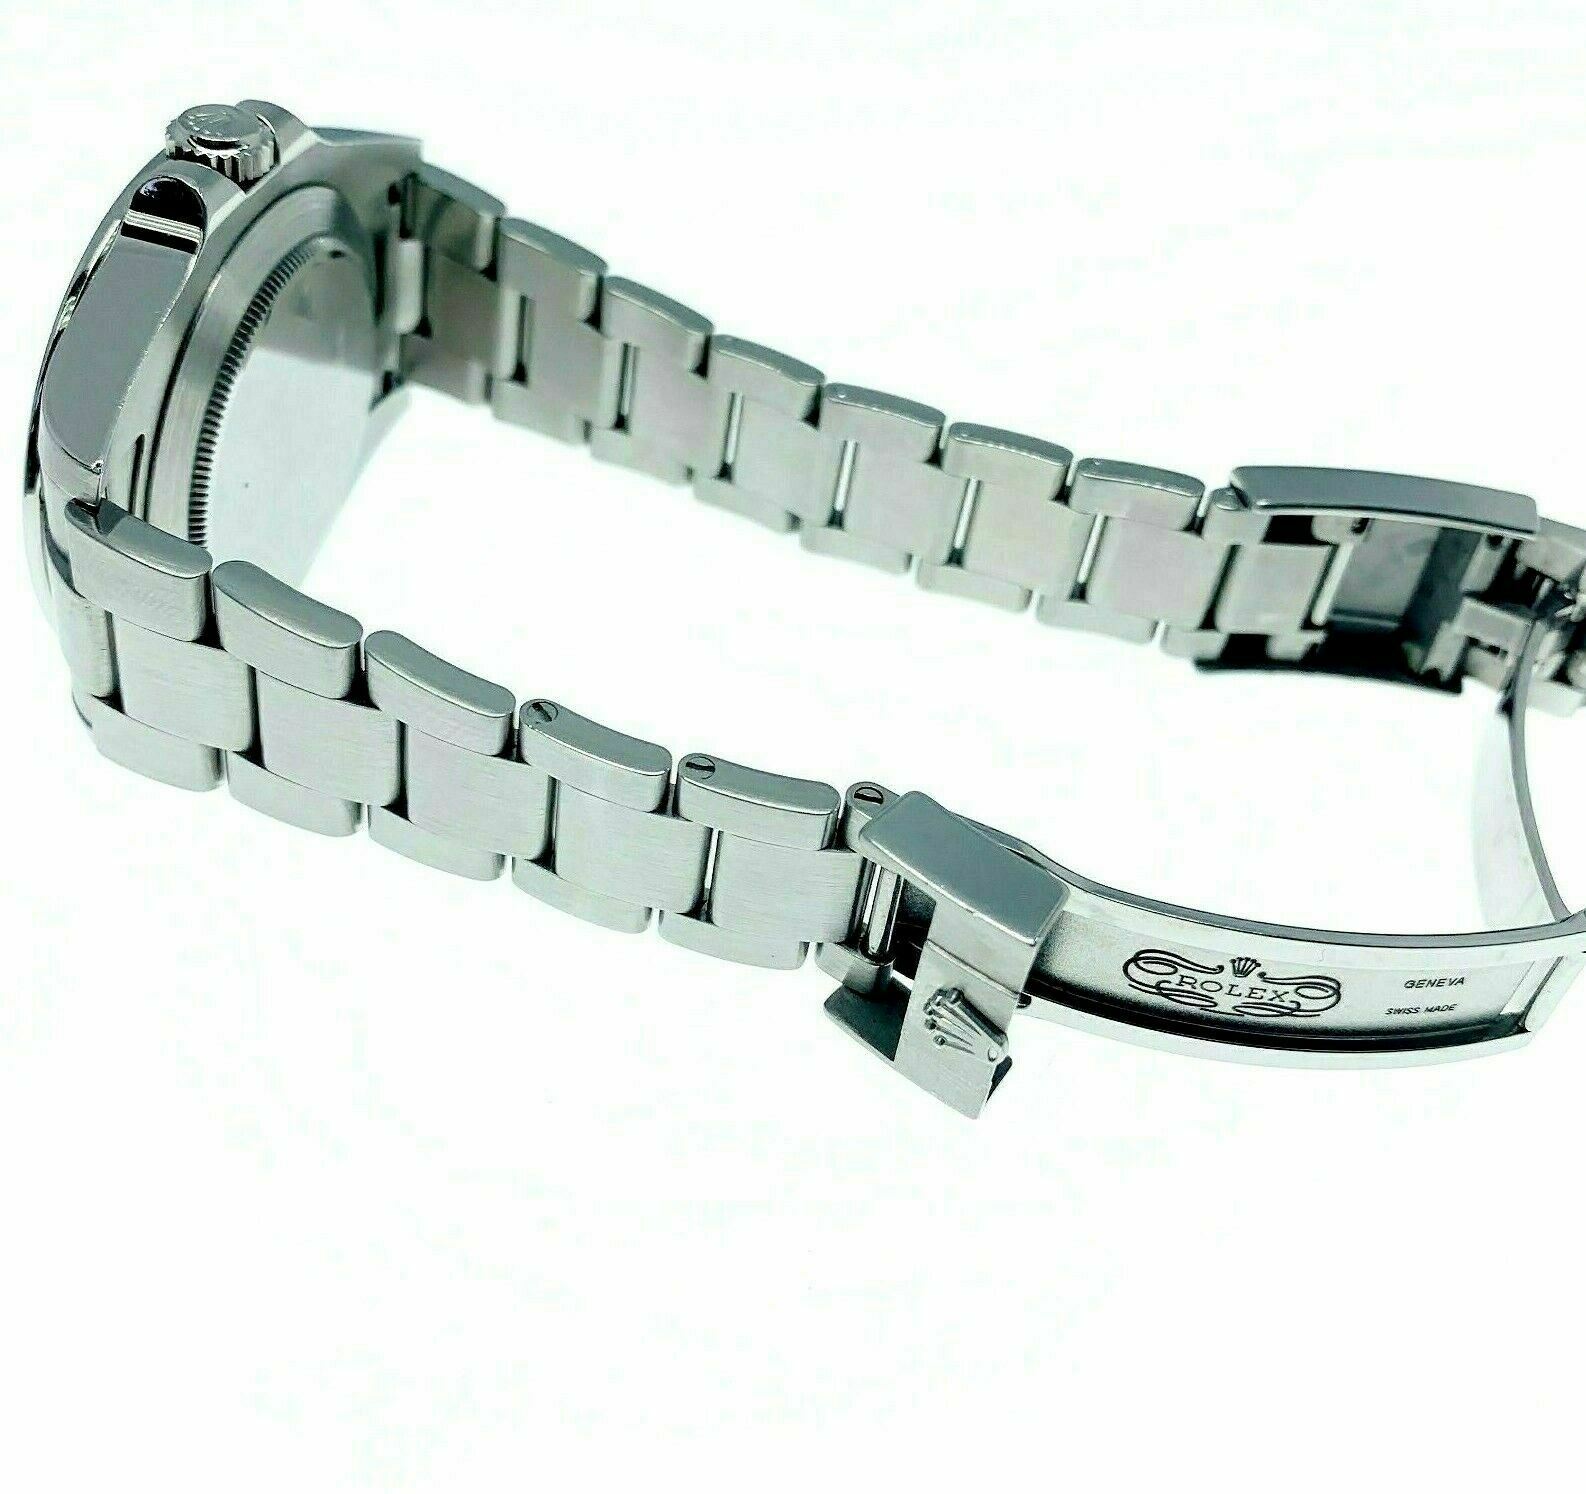 Rolex 42MM Black Explorer II Stainless Watch Ref # 216570 Engraved Serial wCard